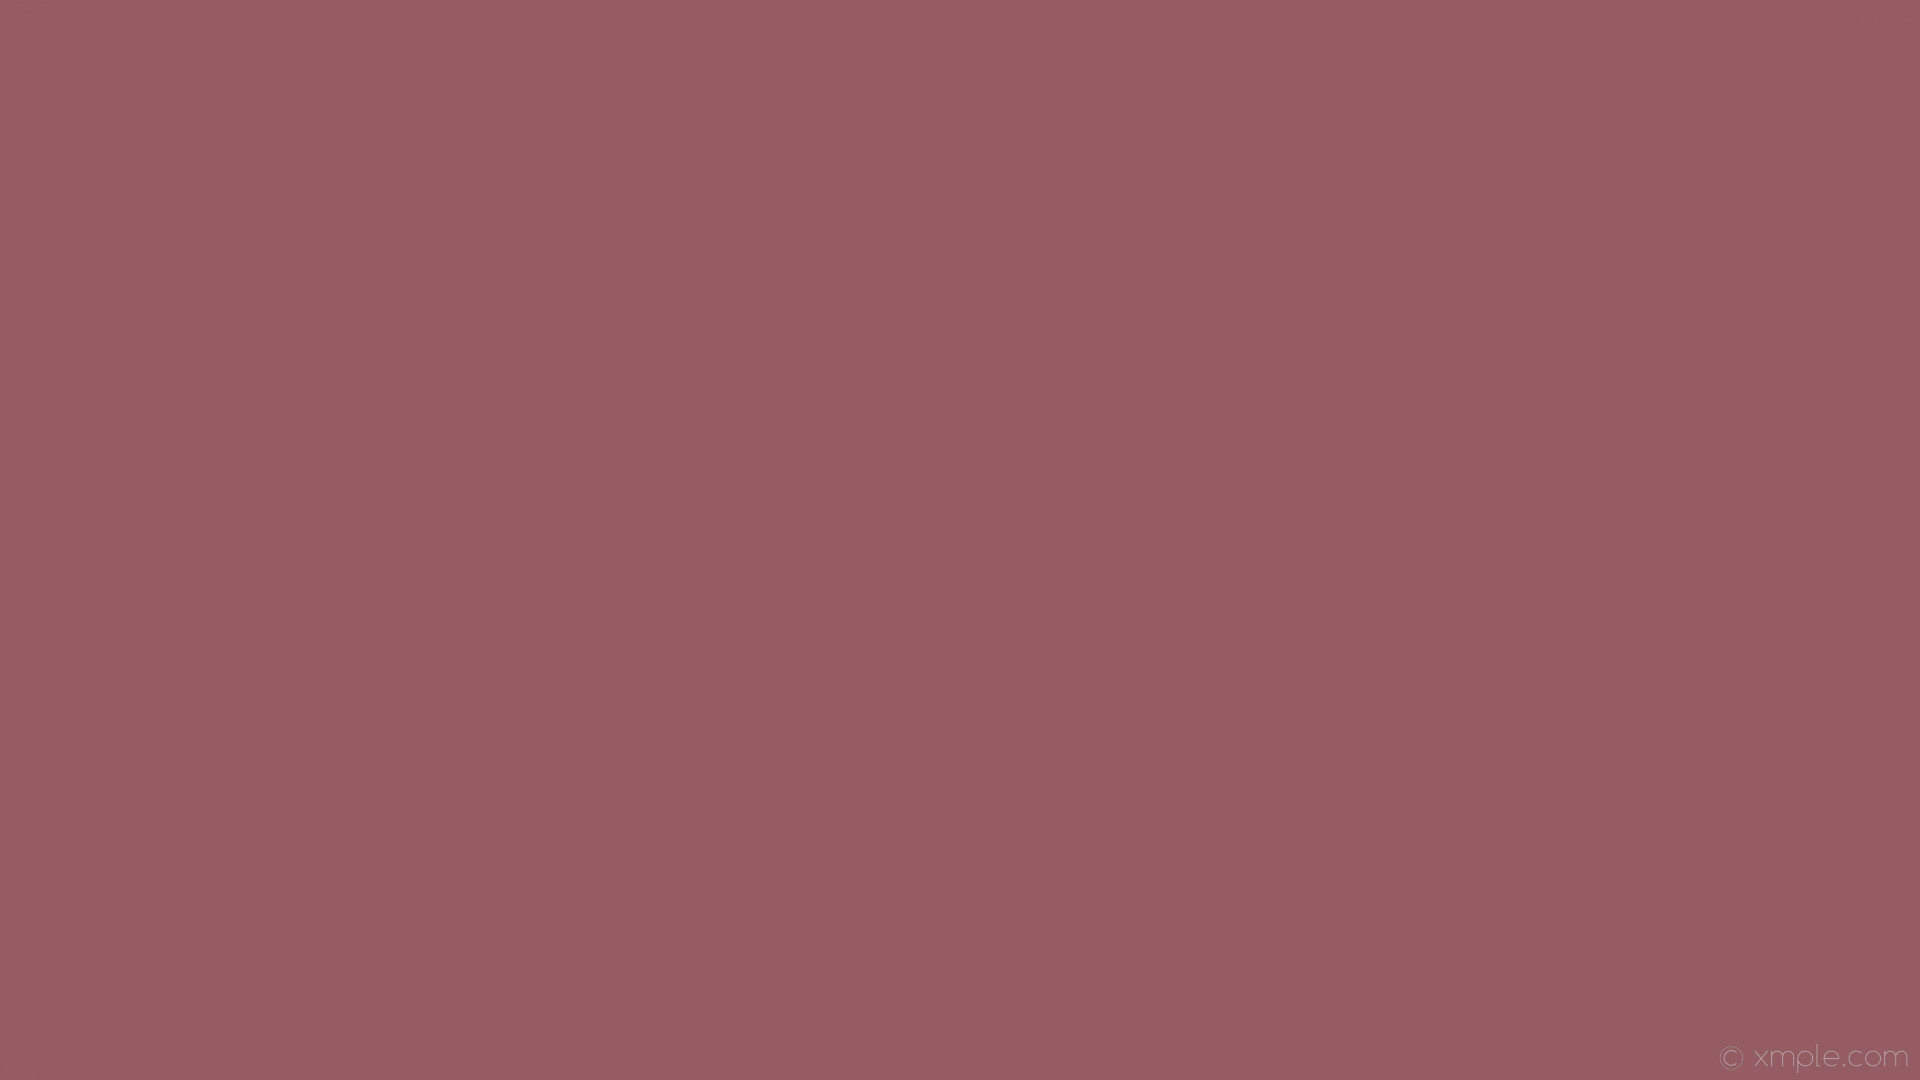 1920x1080 wallpaper plain red solid color one colour single #955c63